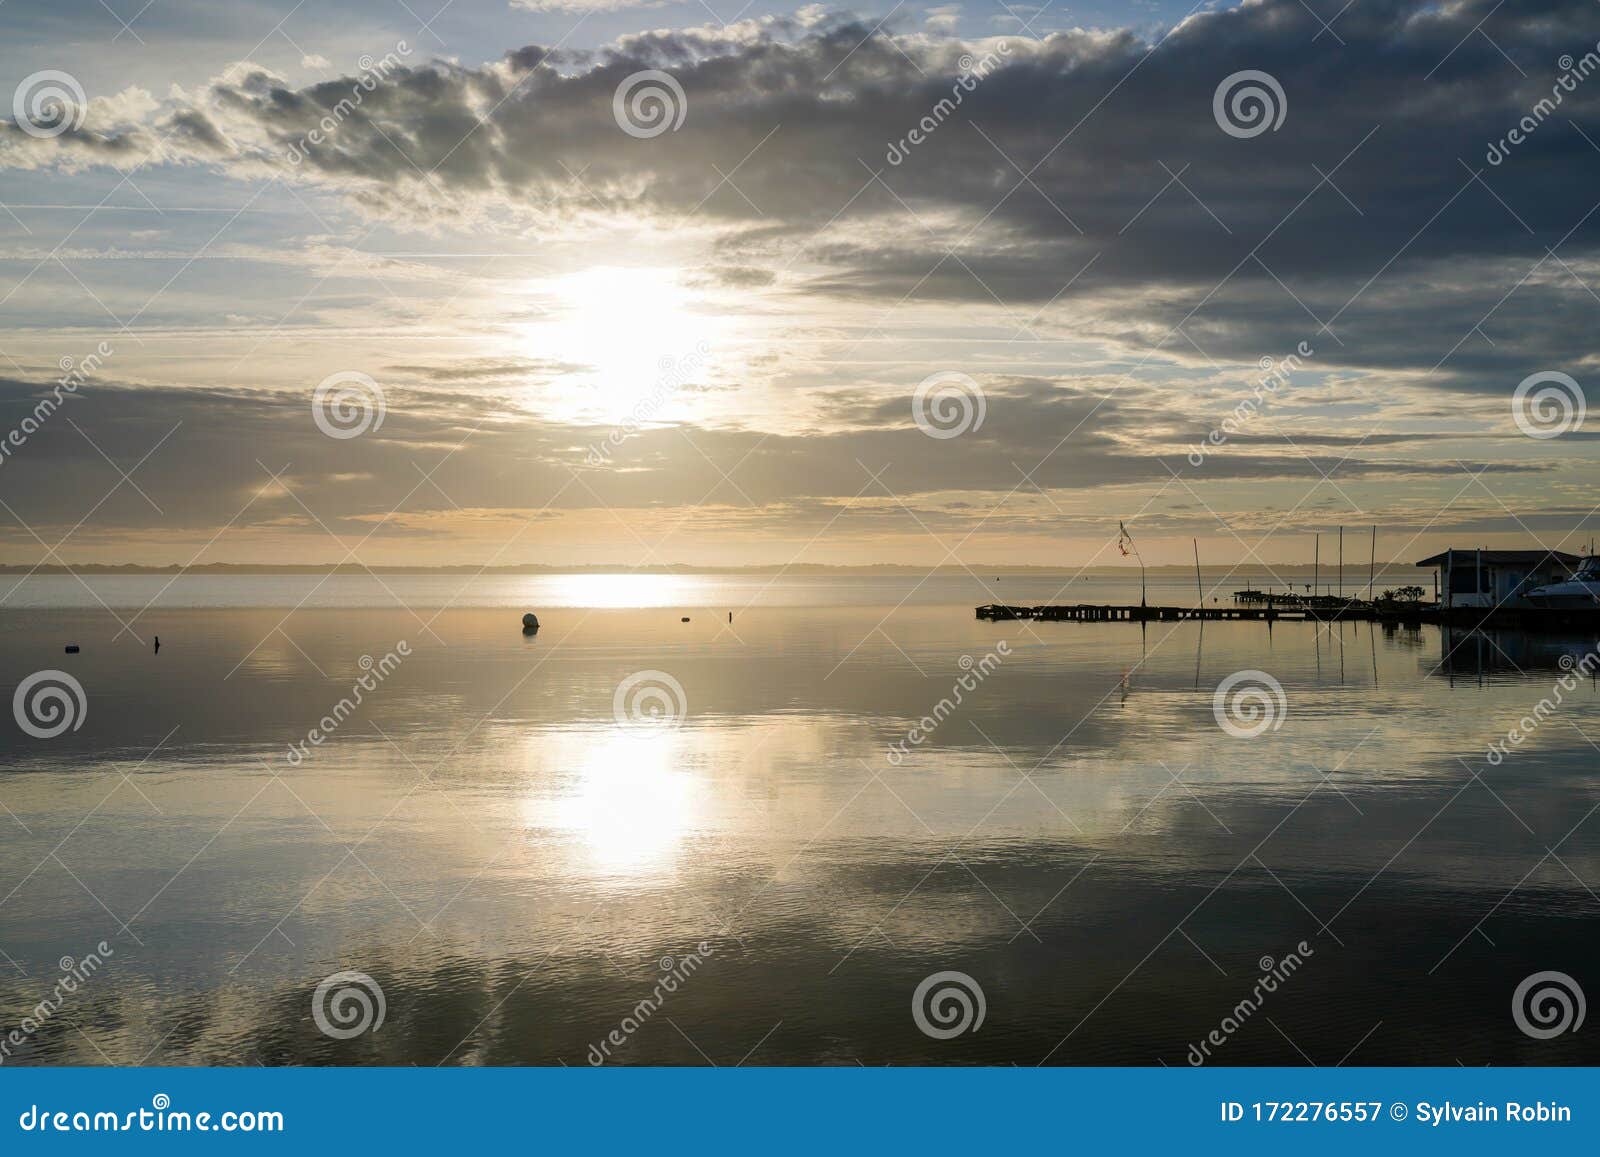 sunrise biscarrosse pontoon pier in sunny sunset in lake